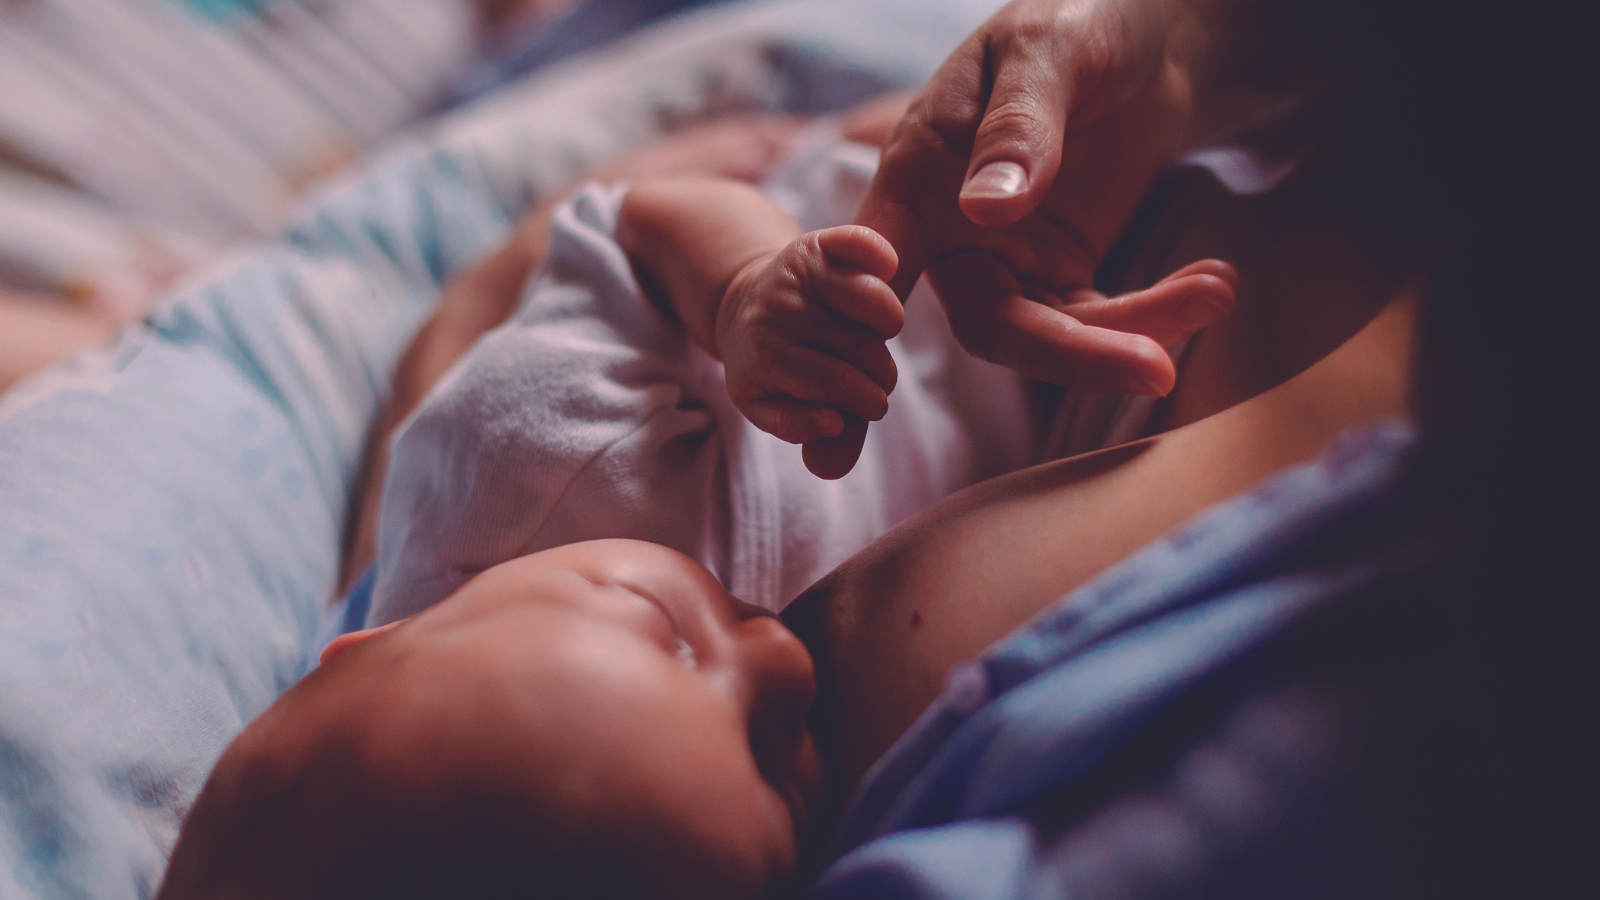 Prioricemos la lactancia materna desde la política laboral: Save the Children